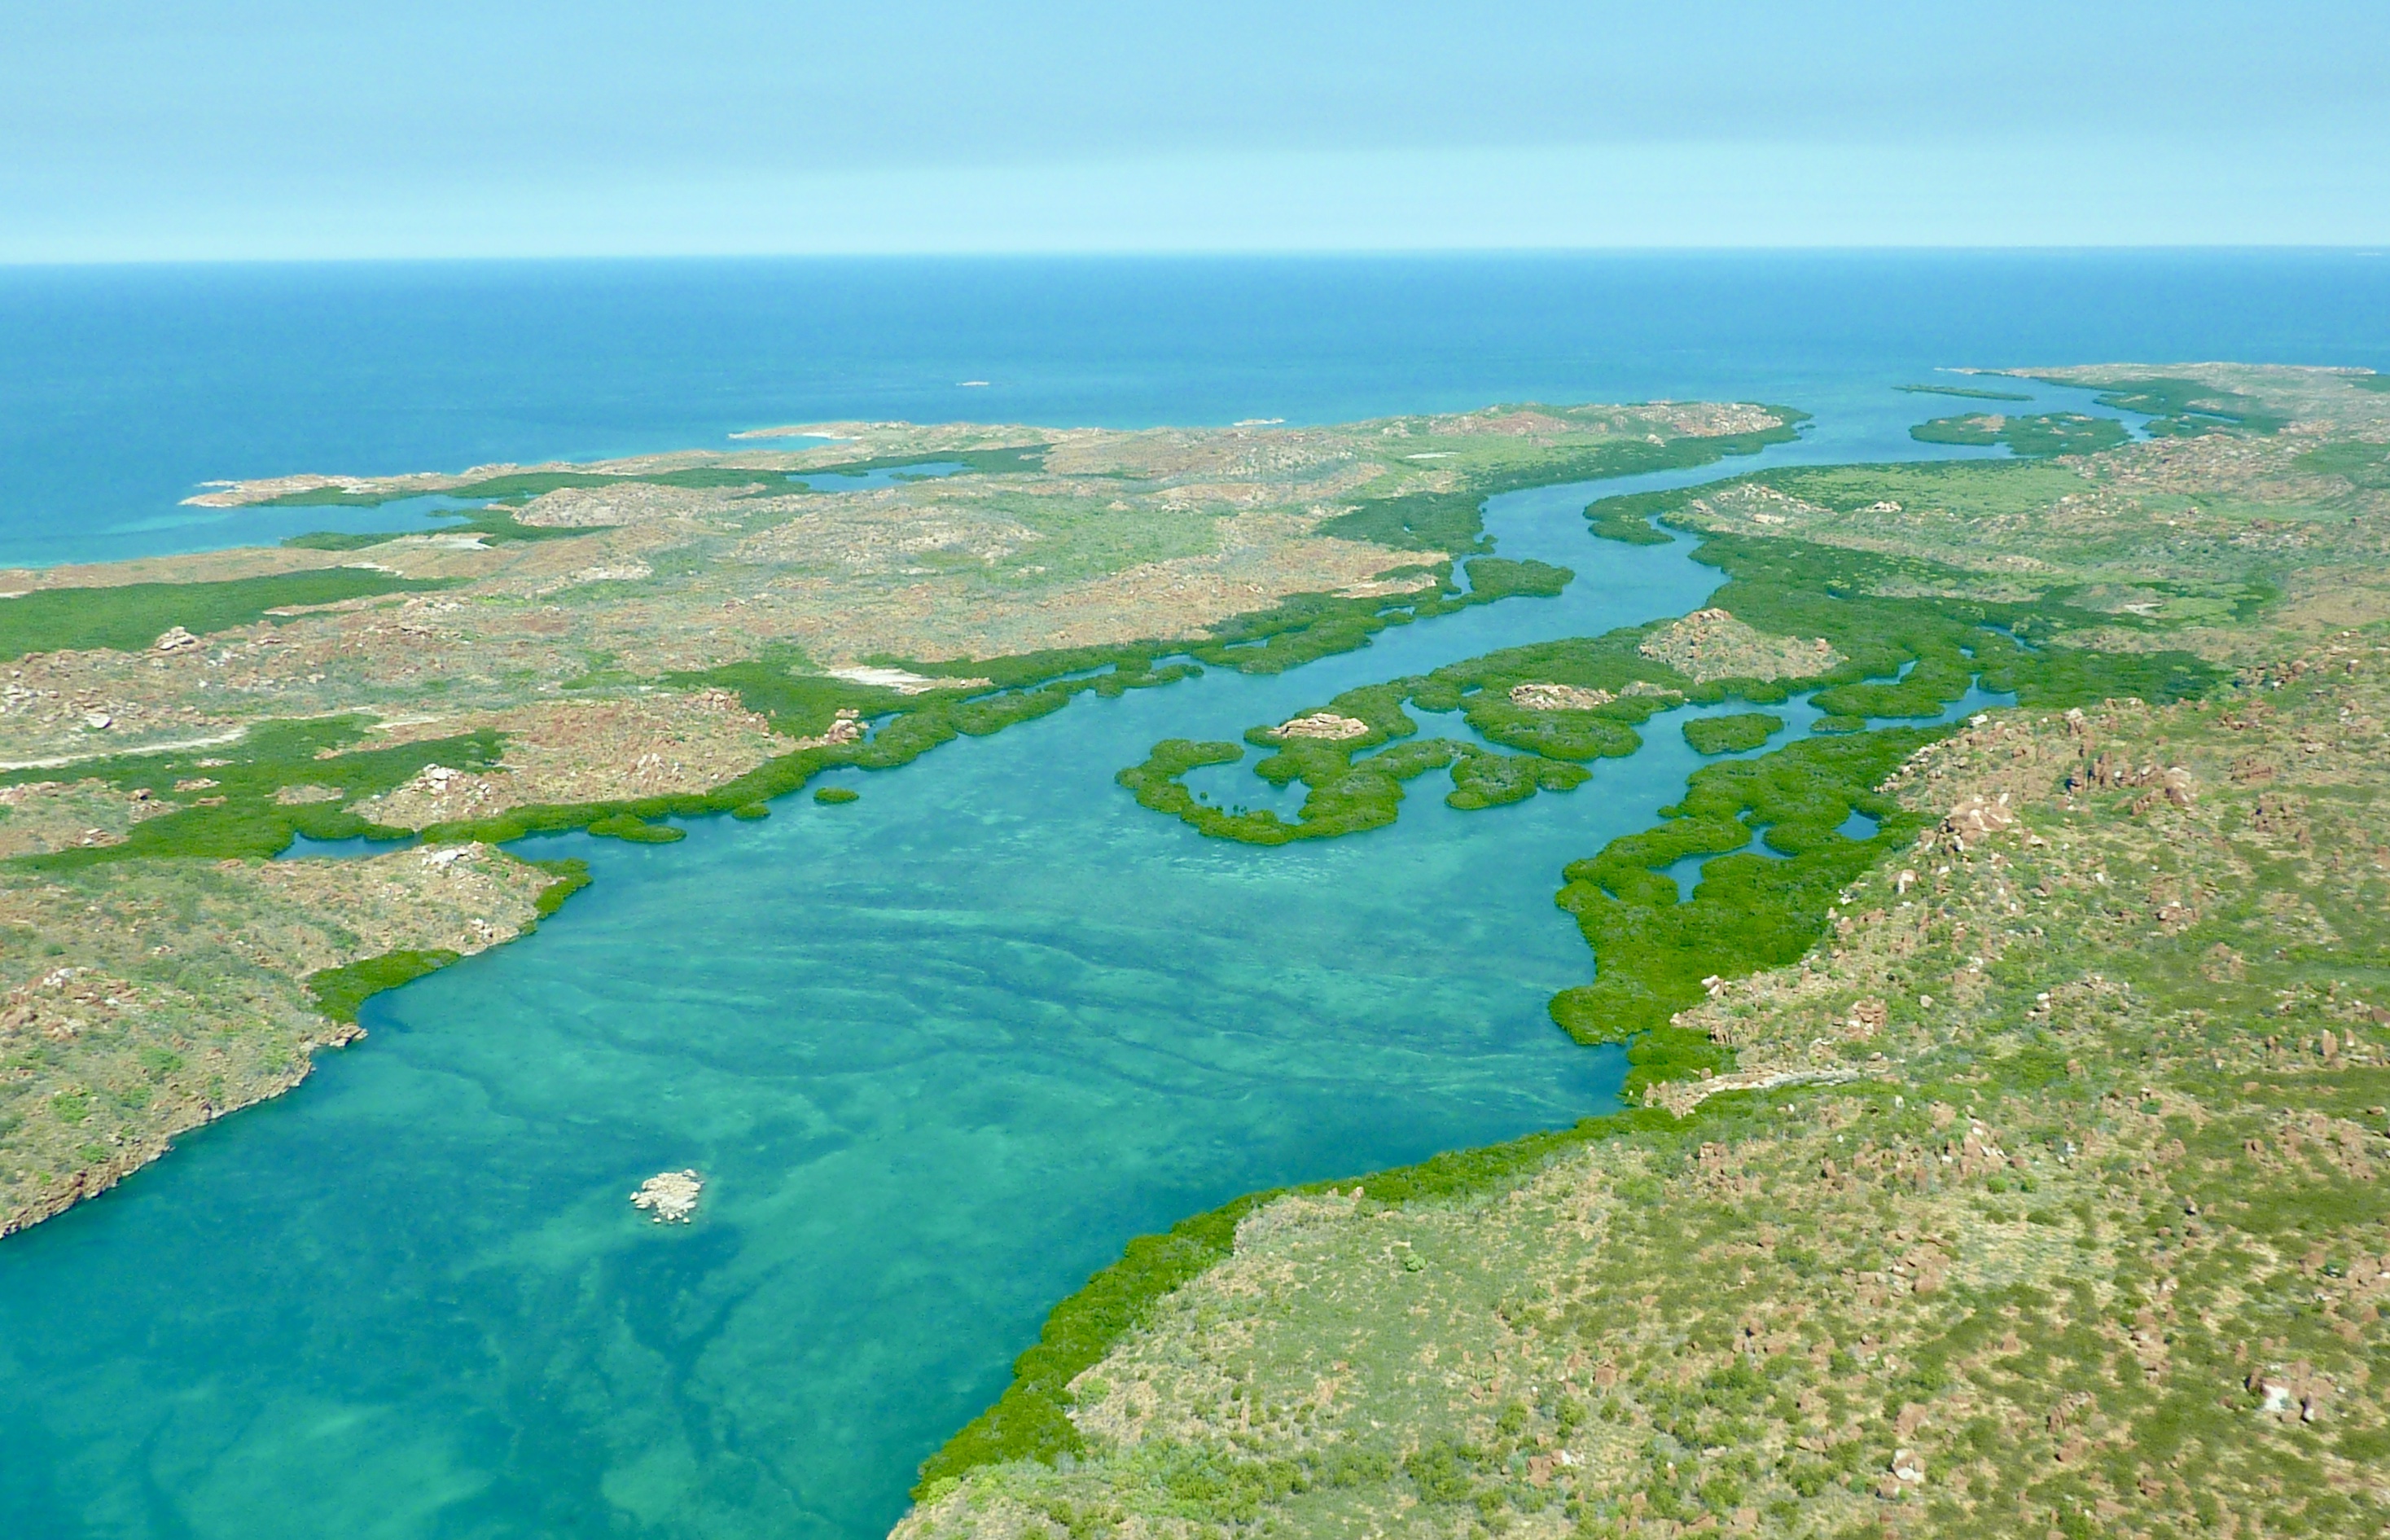 Aerial Images of the Buccaneer Archipelago